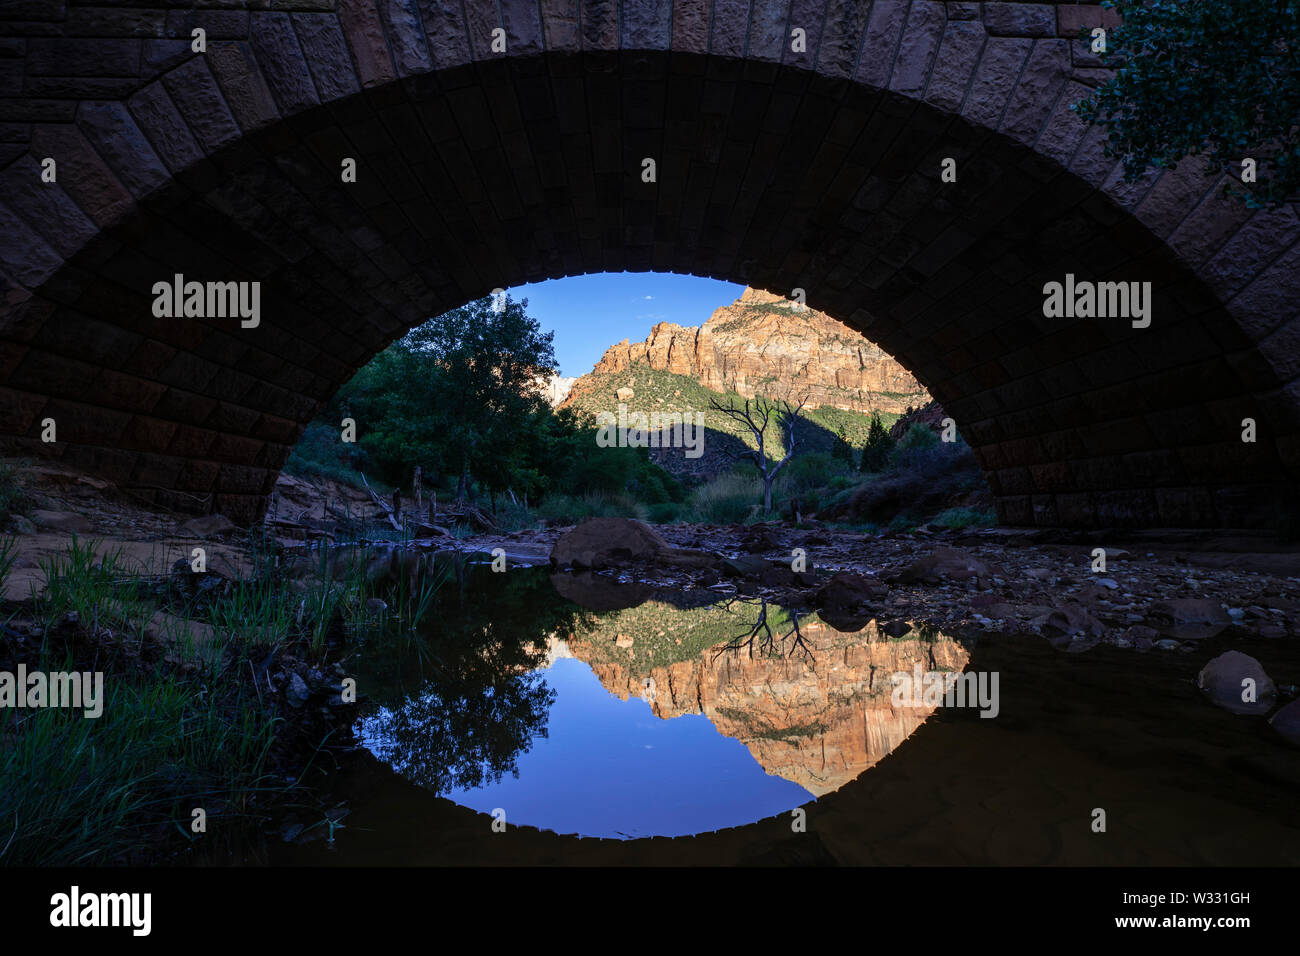 Reflections under Virgin River bridge in Zion National Park, Utah, United States of America Stock Photo